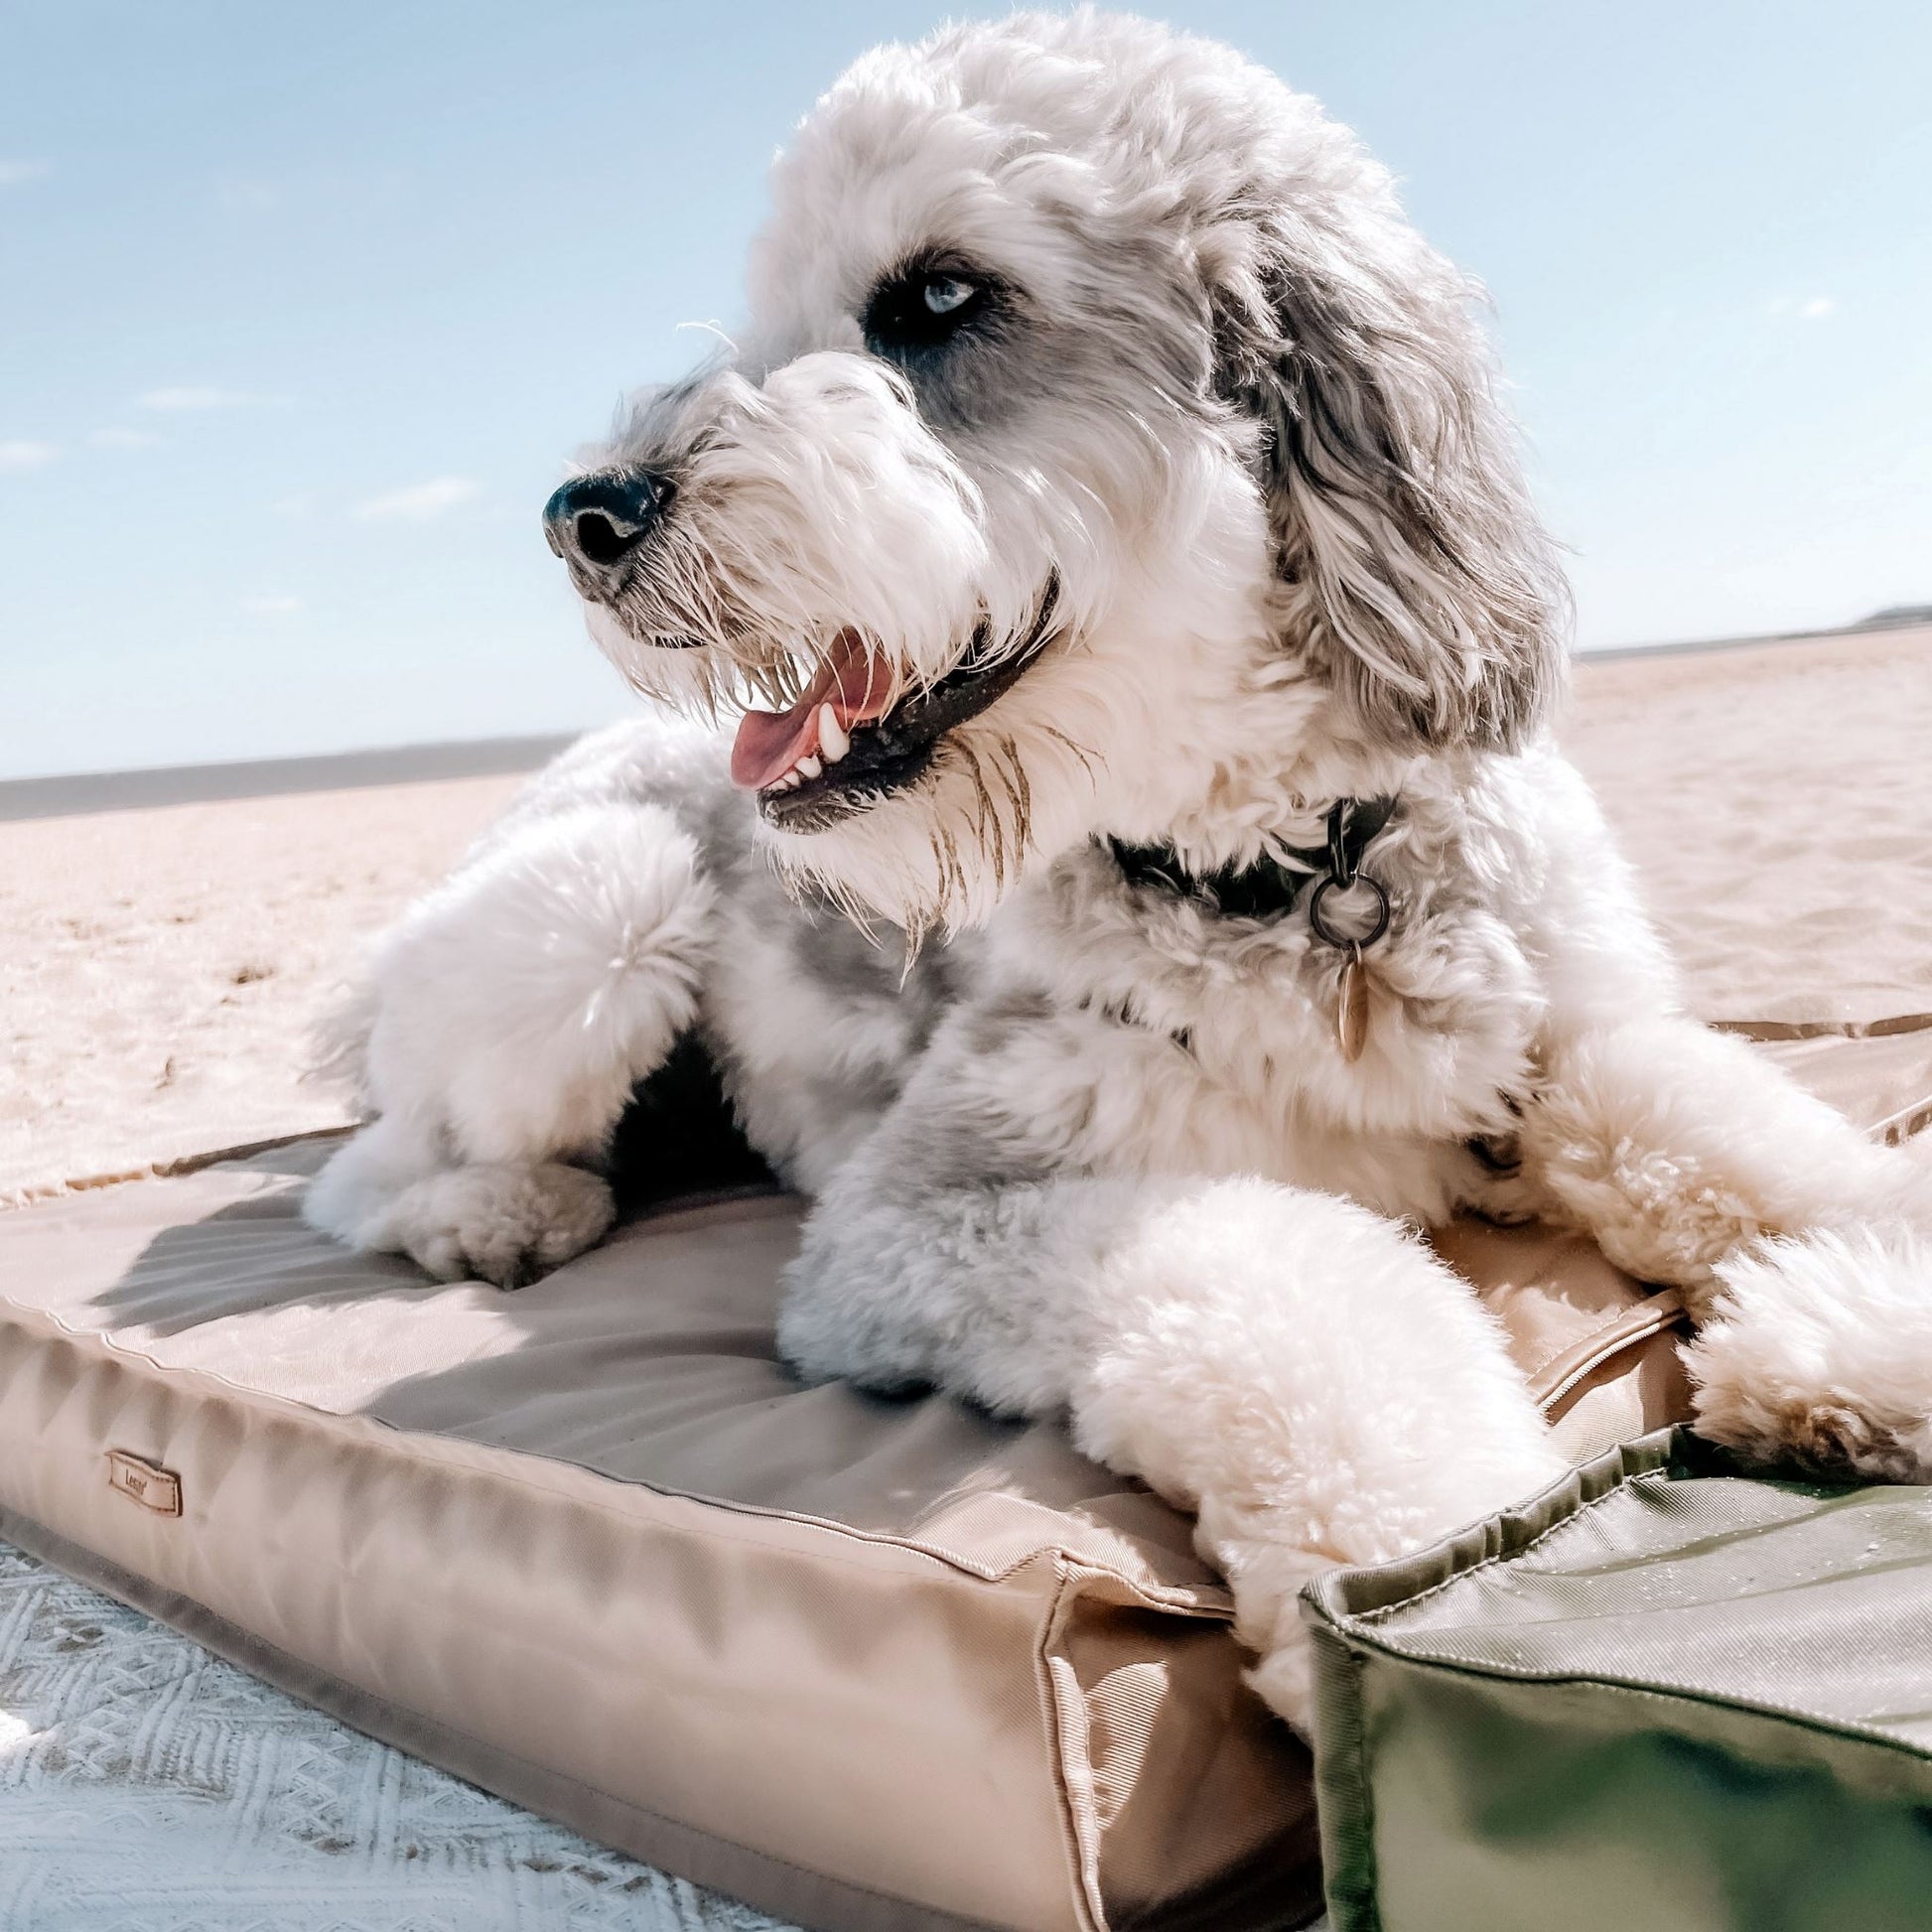 Grey Waterproof Liner Large Orthopedic Dog Bed Outdoor Summer Pets Crate  Mat Pad